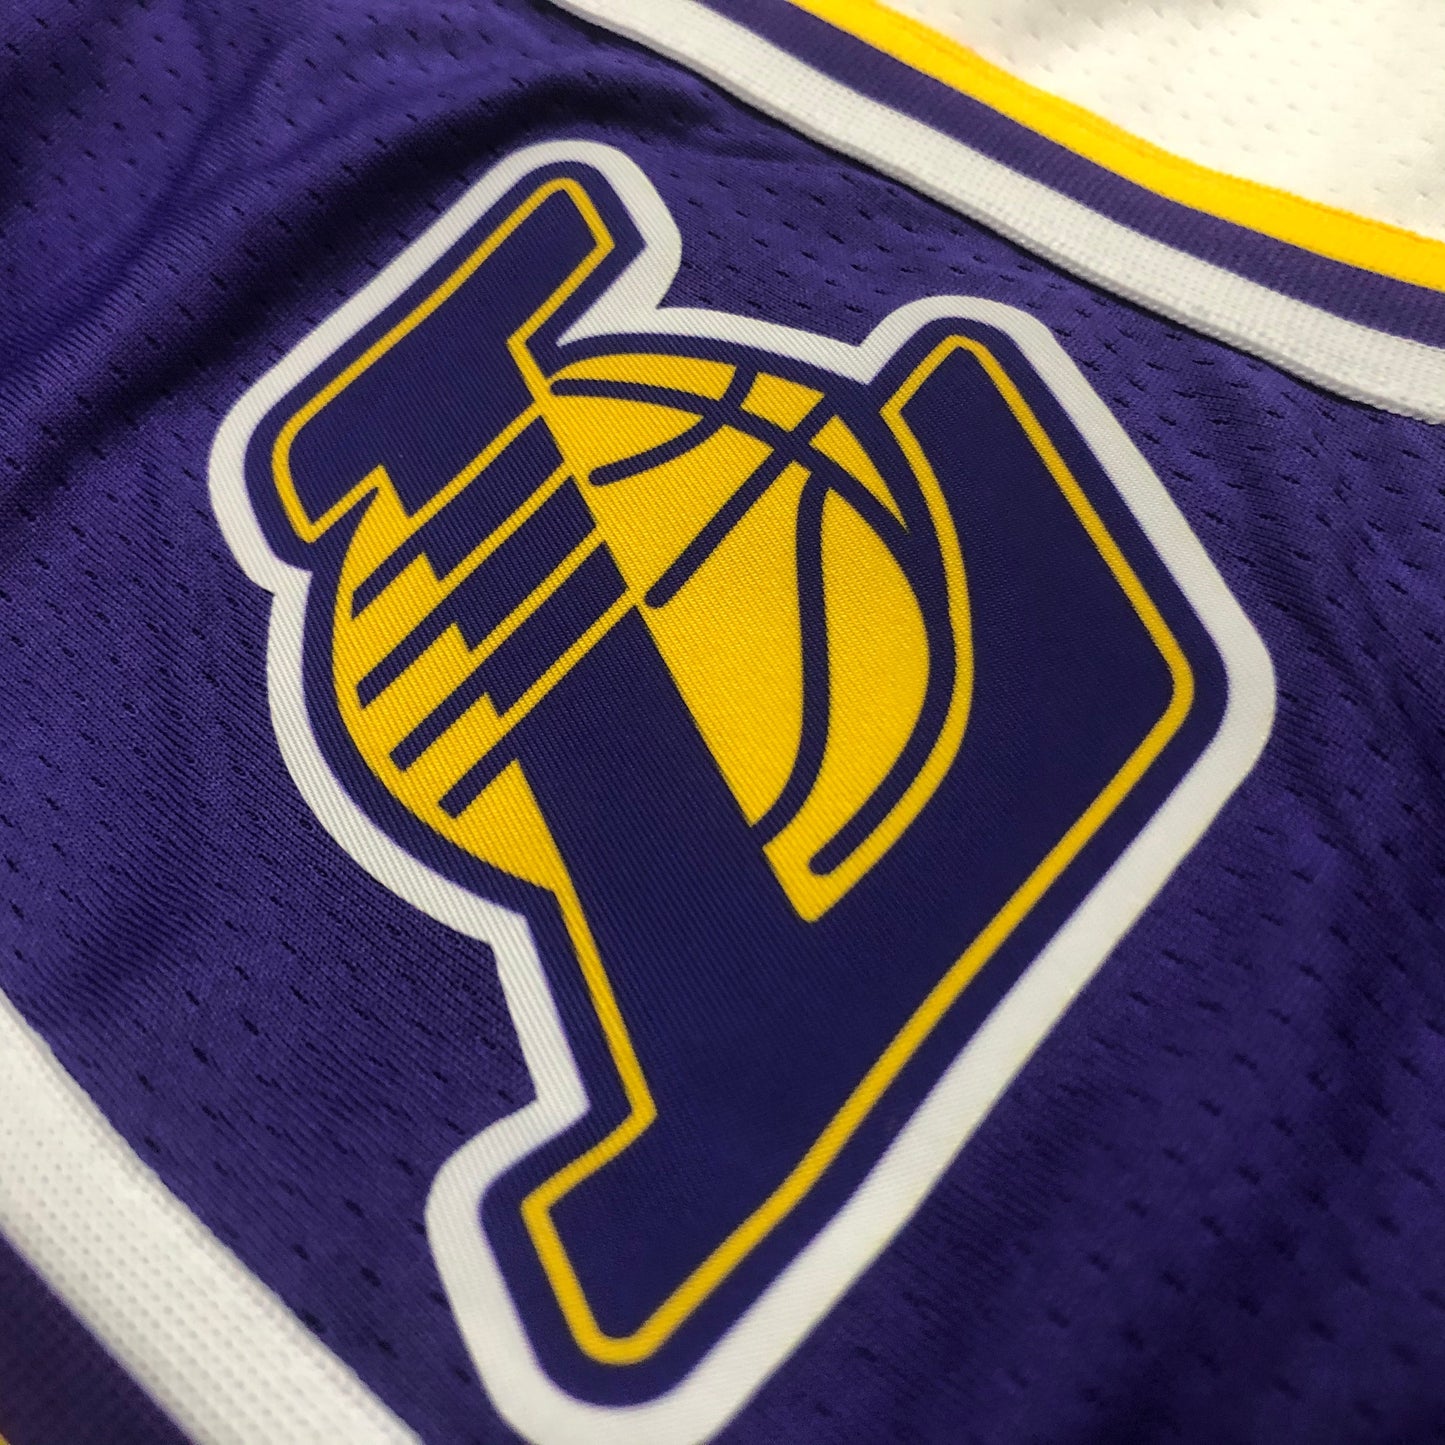 Short Los Angeles Lakers Association Edition